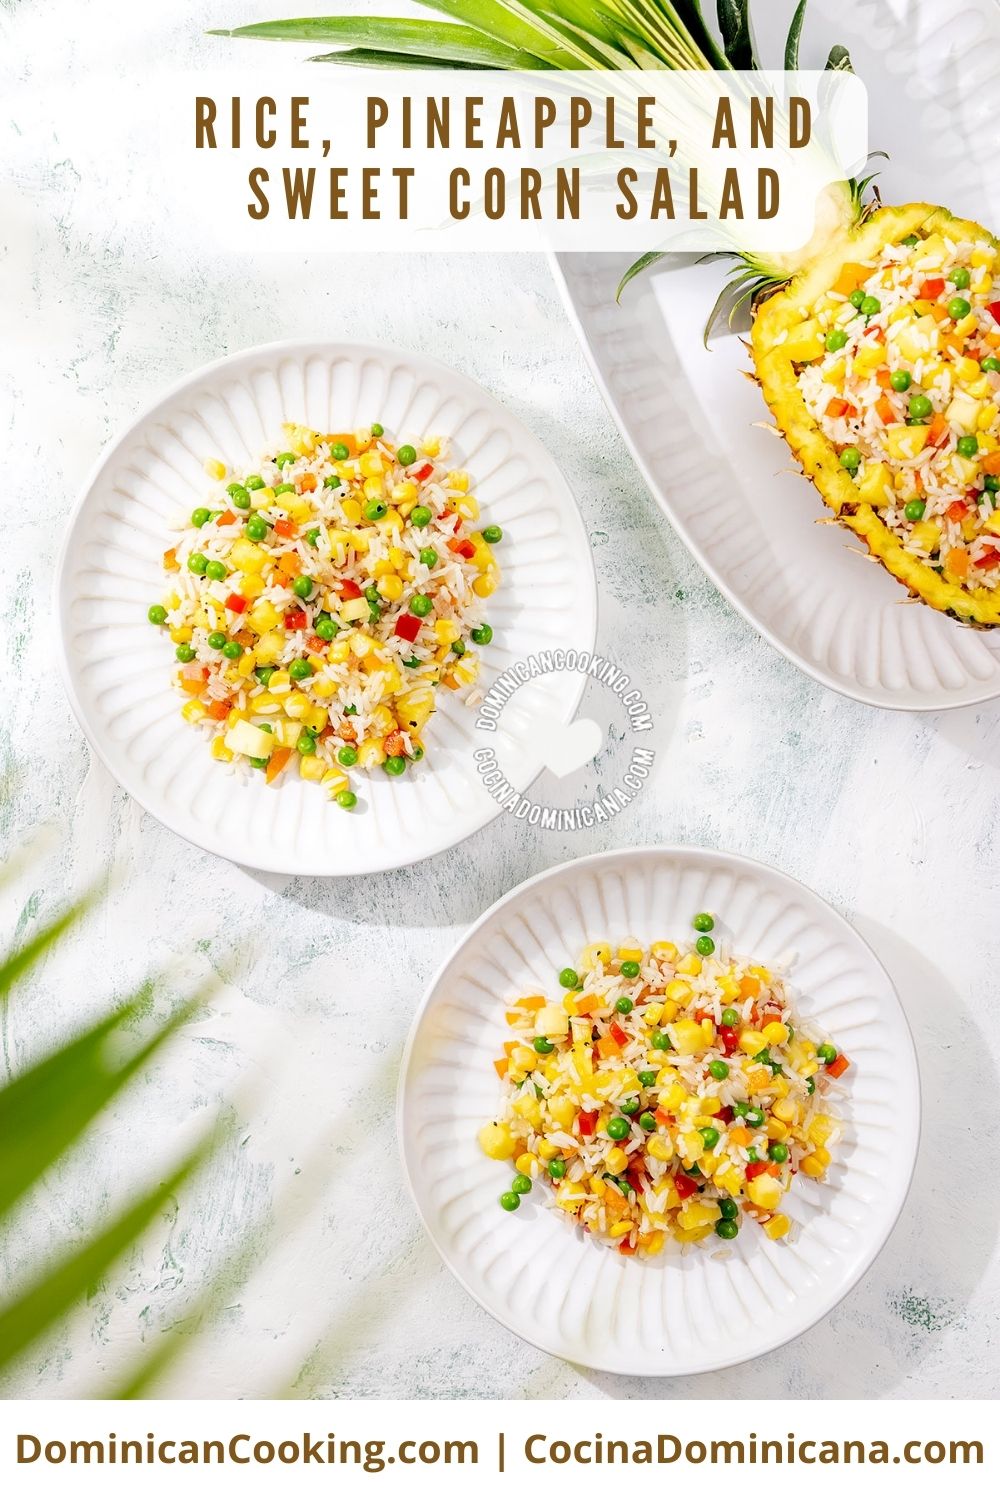 Rice, pineapple and sweet corn salad recipe.